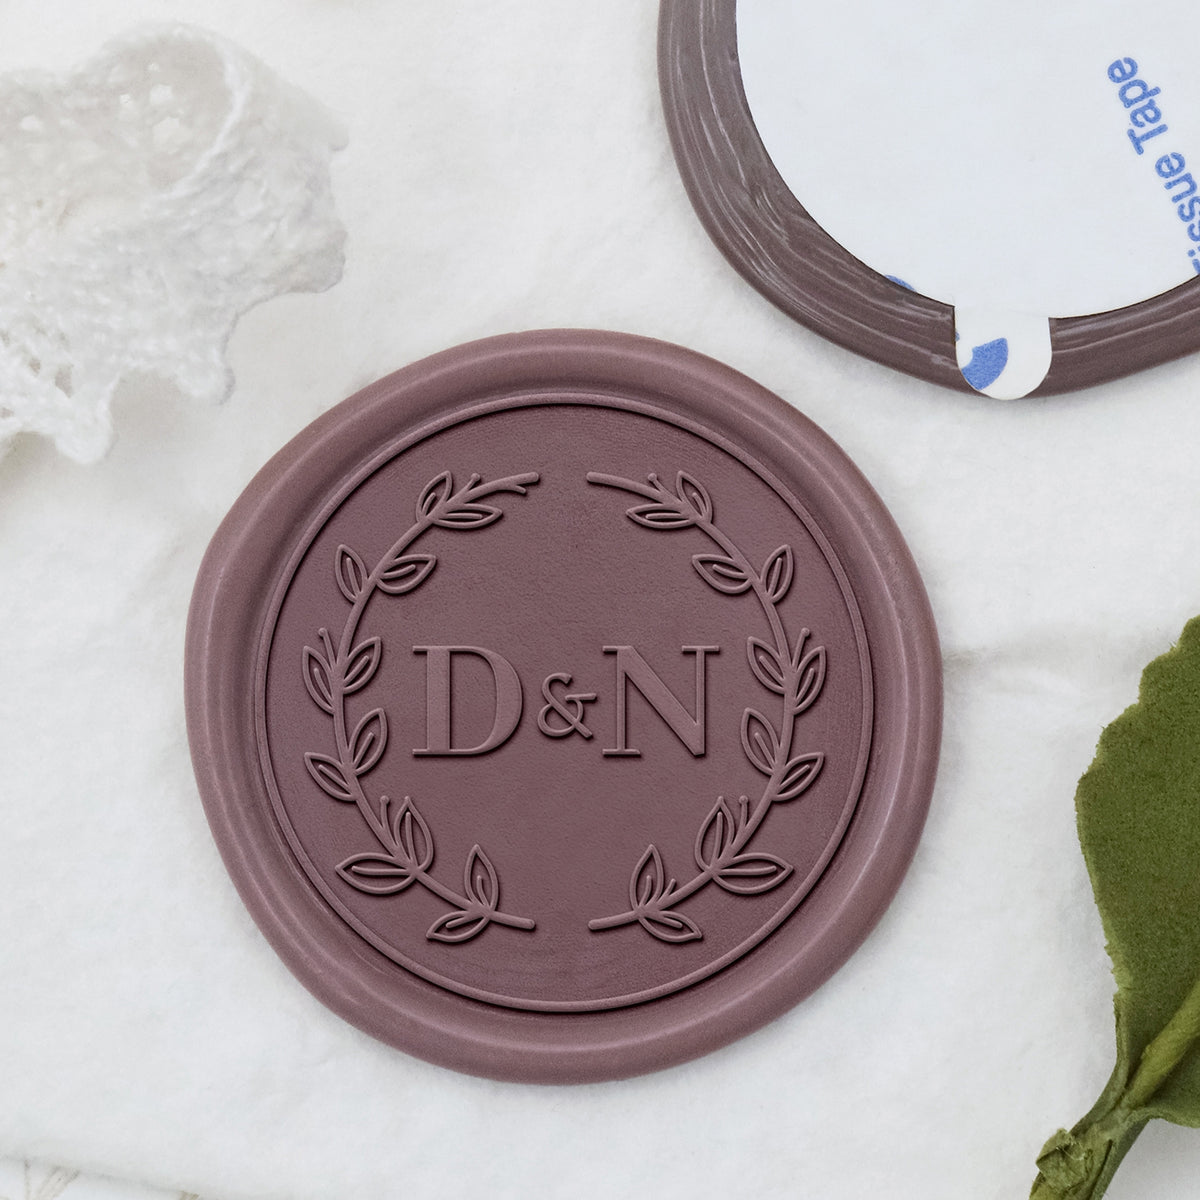 Modernist Wedding Monogram Adhesive Wax Seals #3389 Bundle with